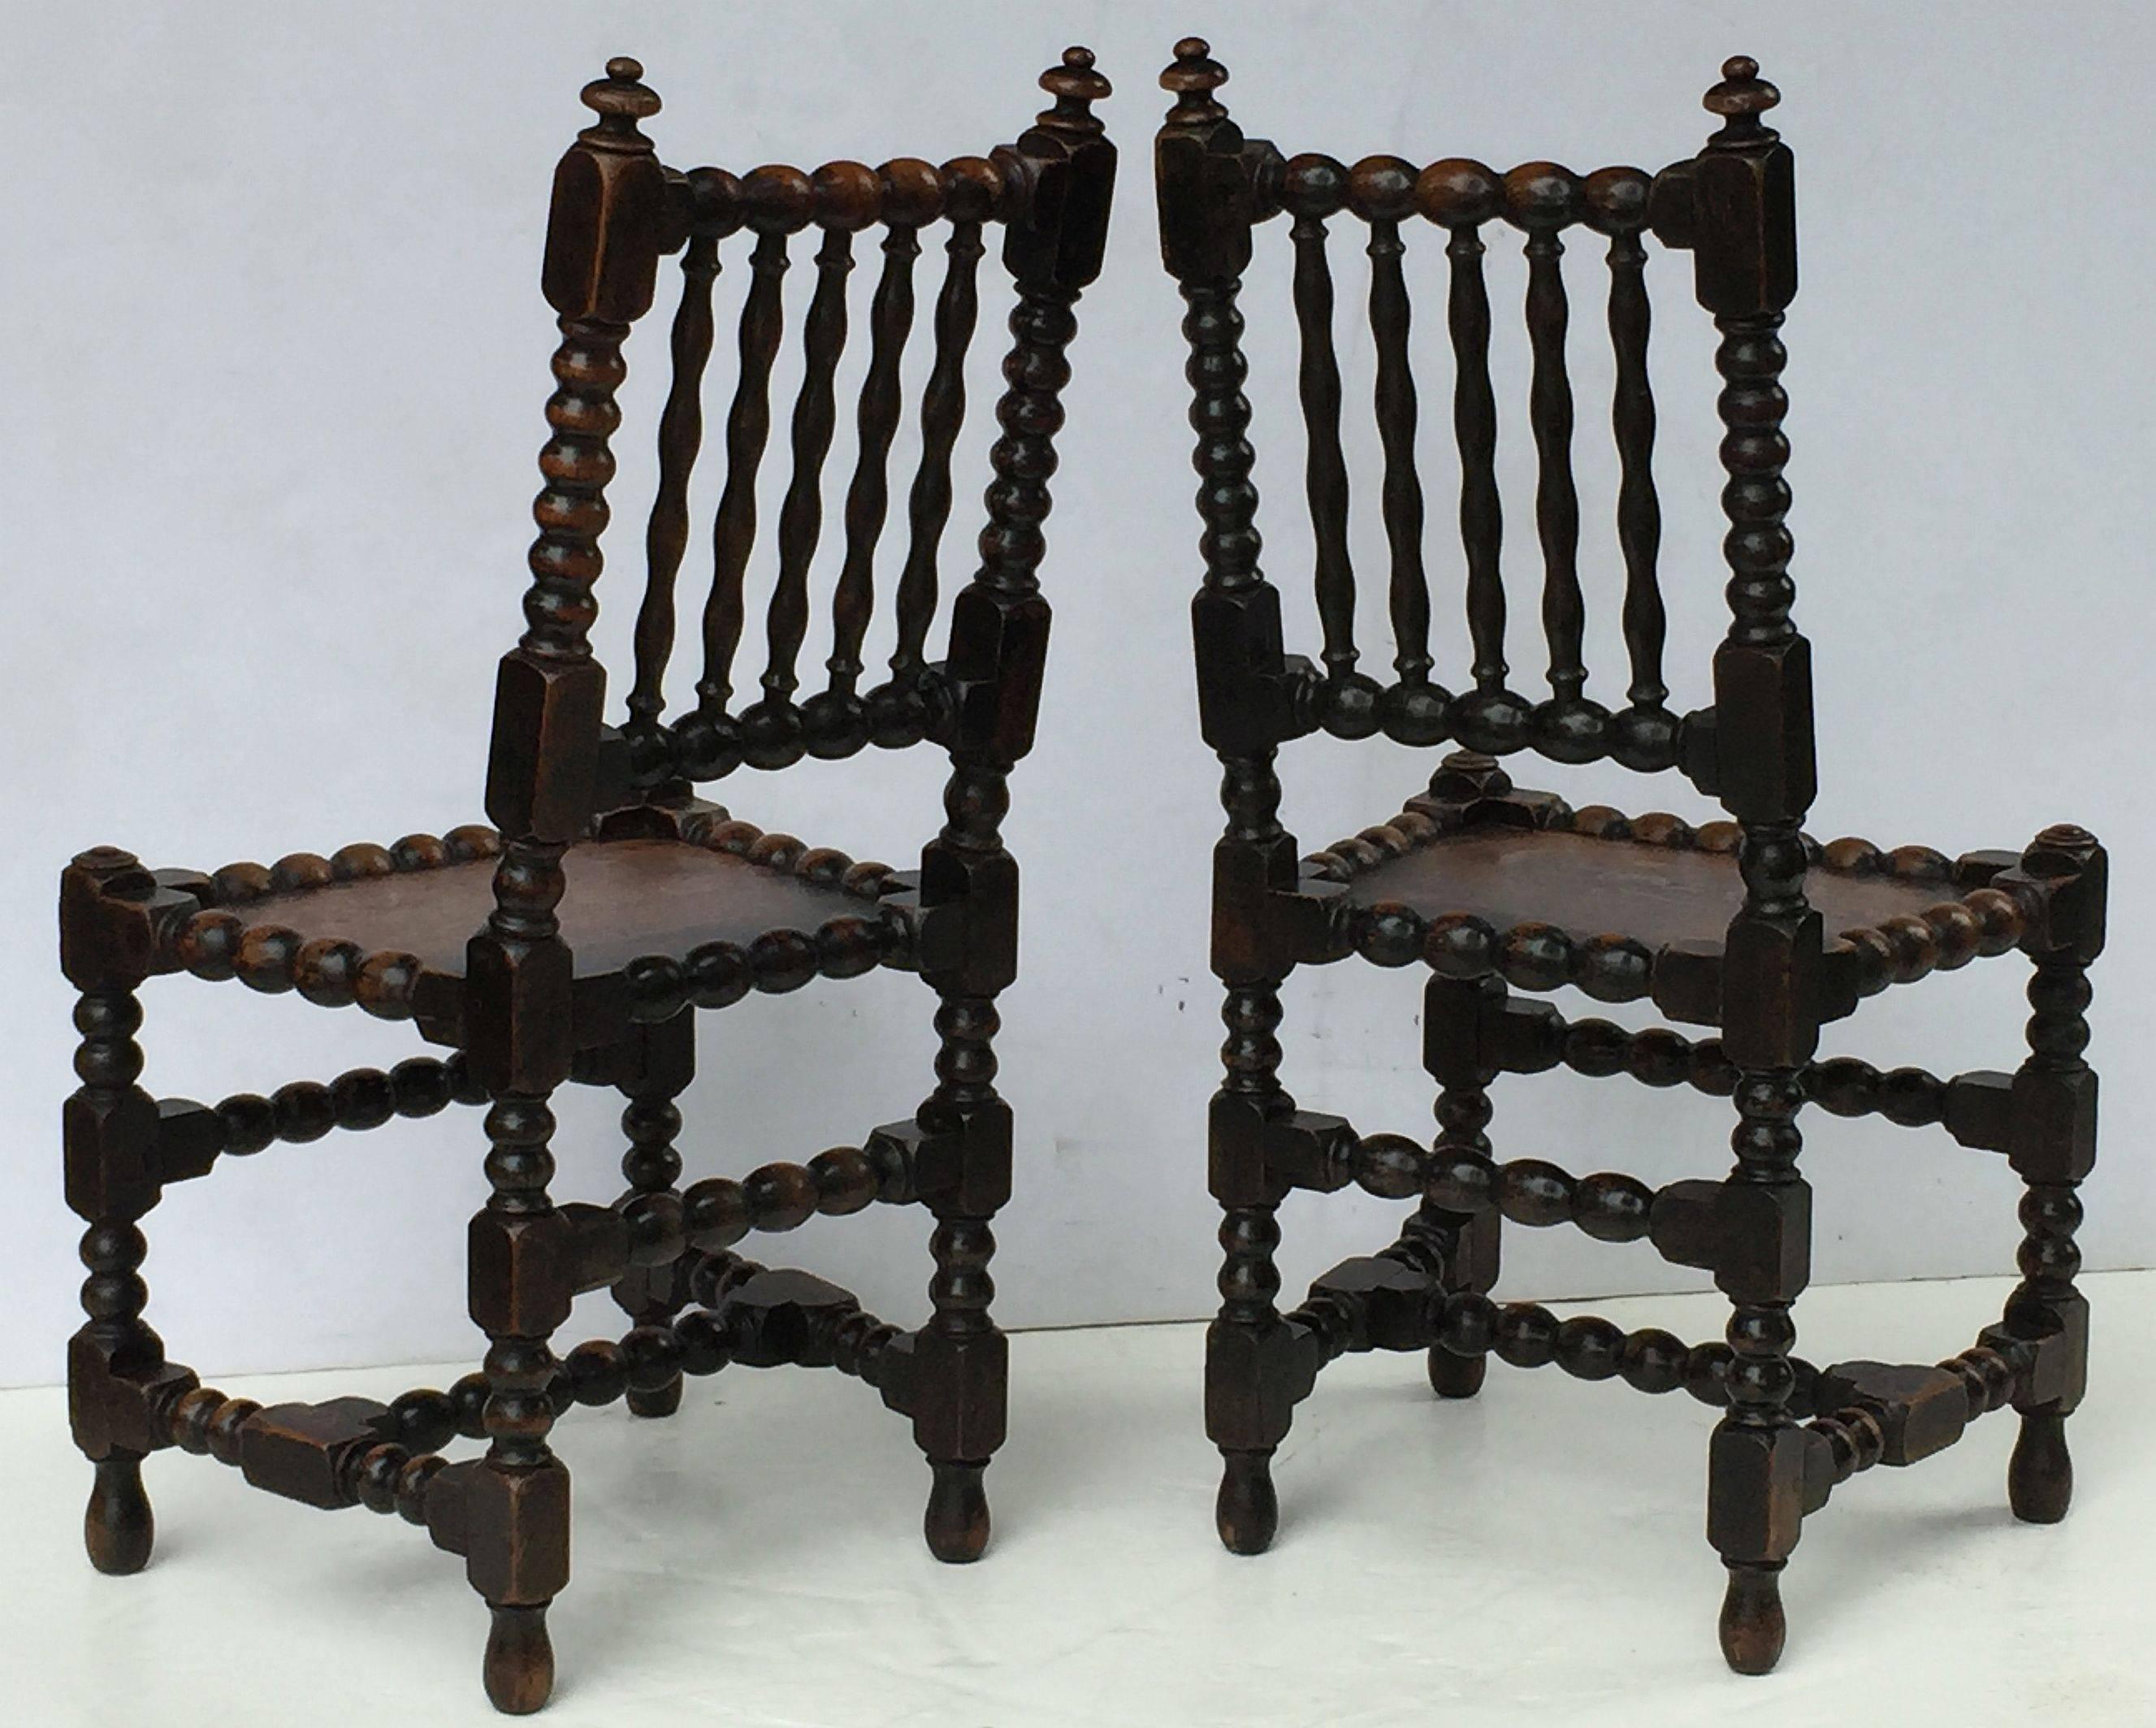 Turned English Bobbin Chairs from the Georgian Era